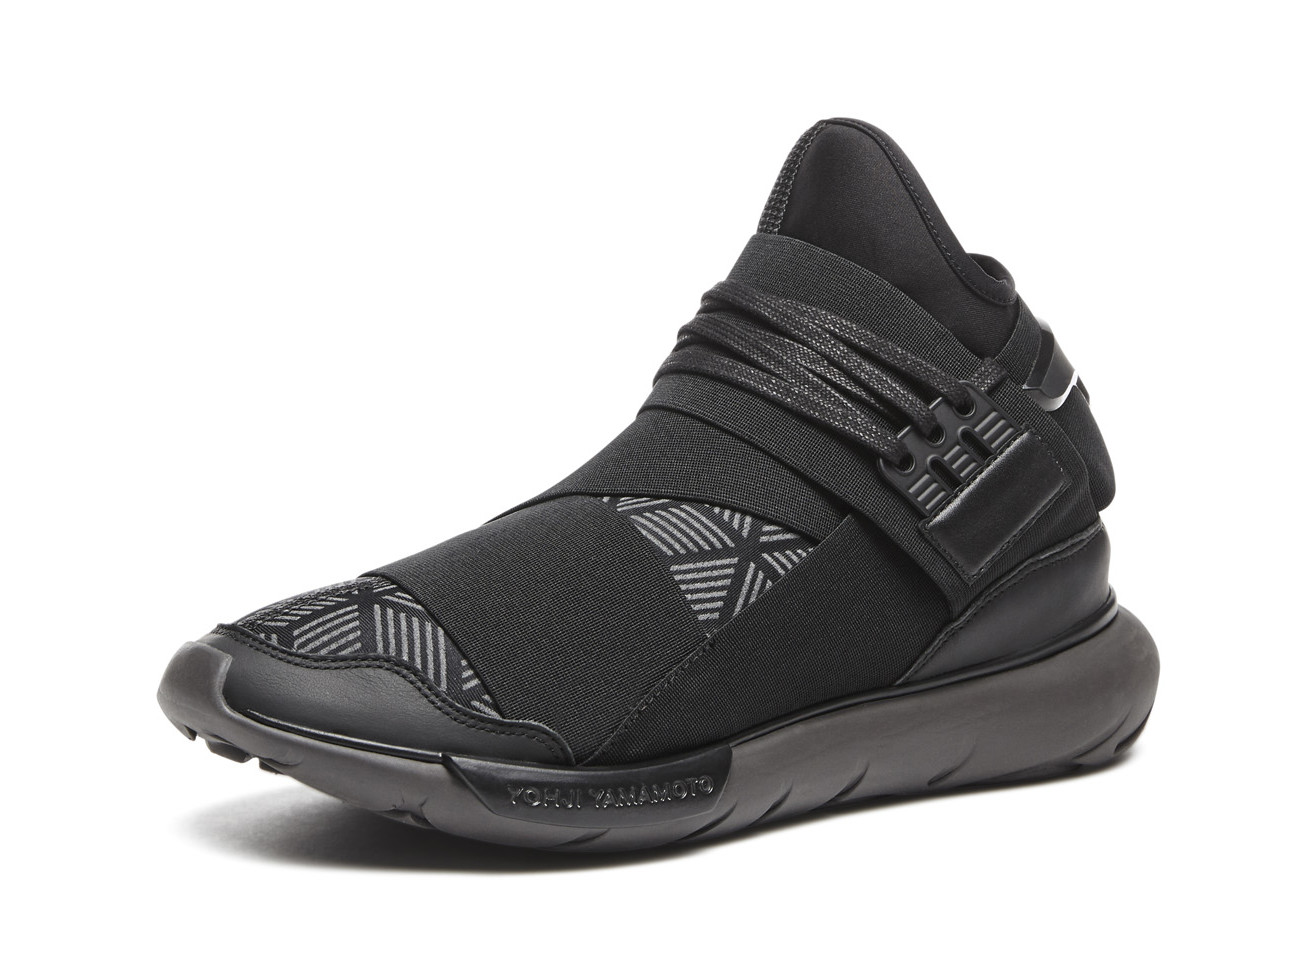 Adidas Futuristic Sneaker Collection |